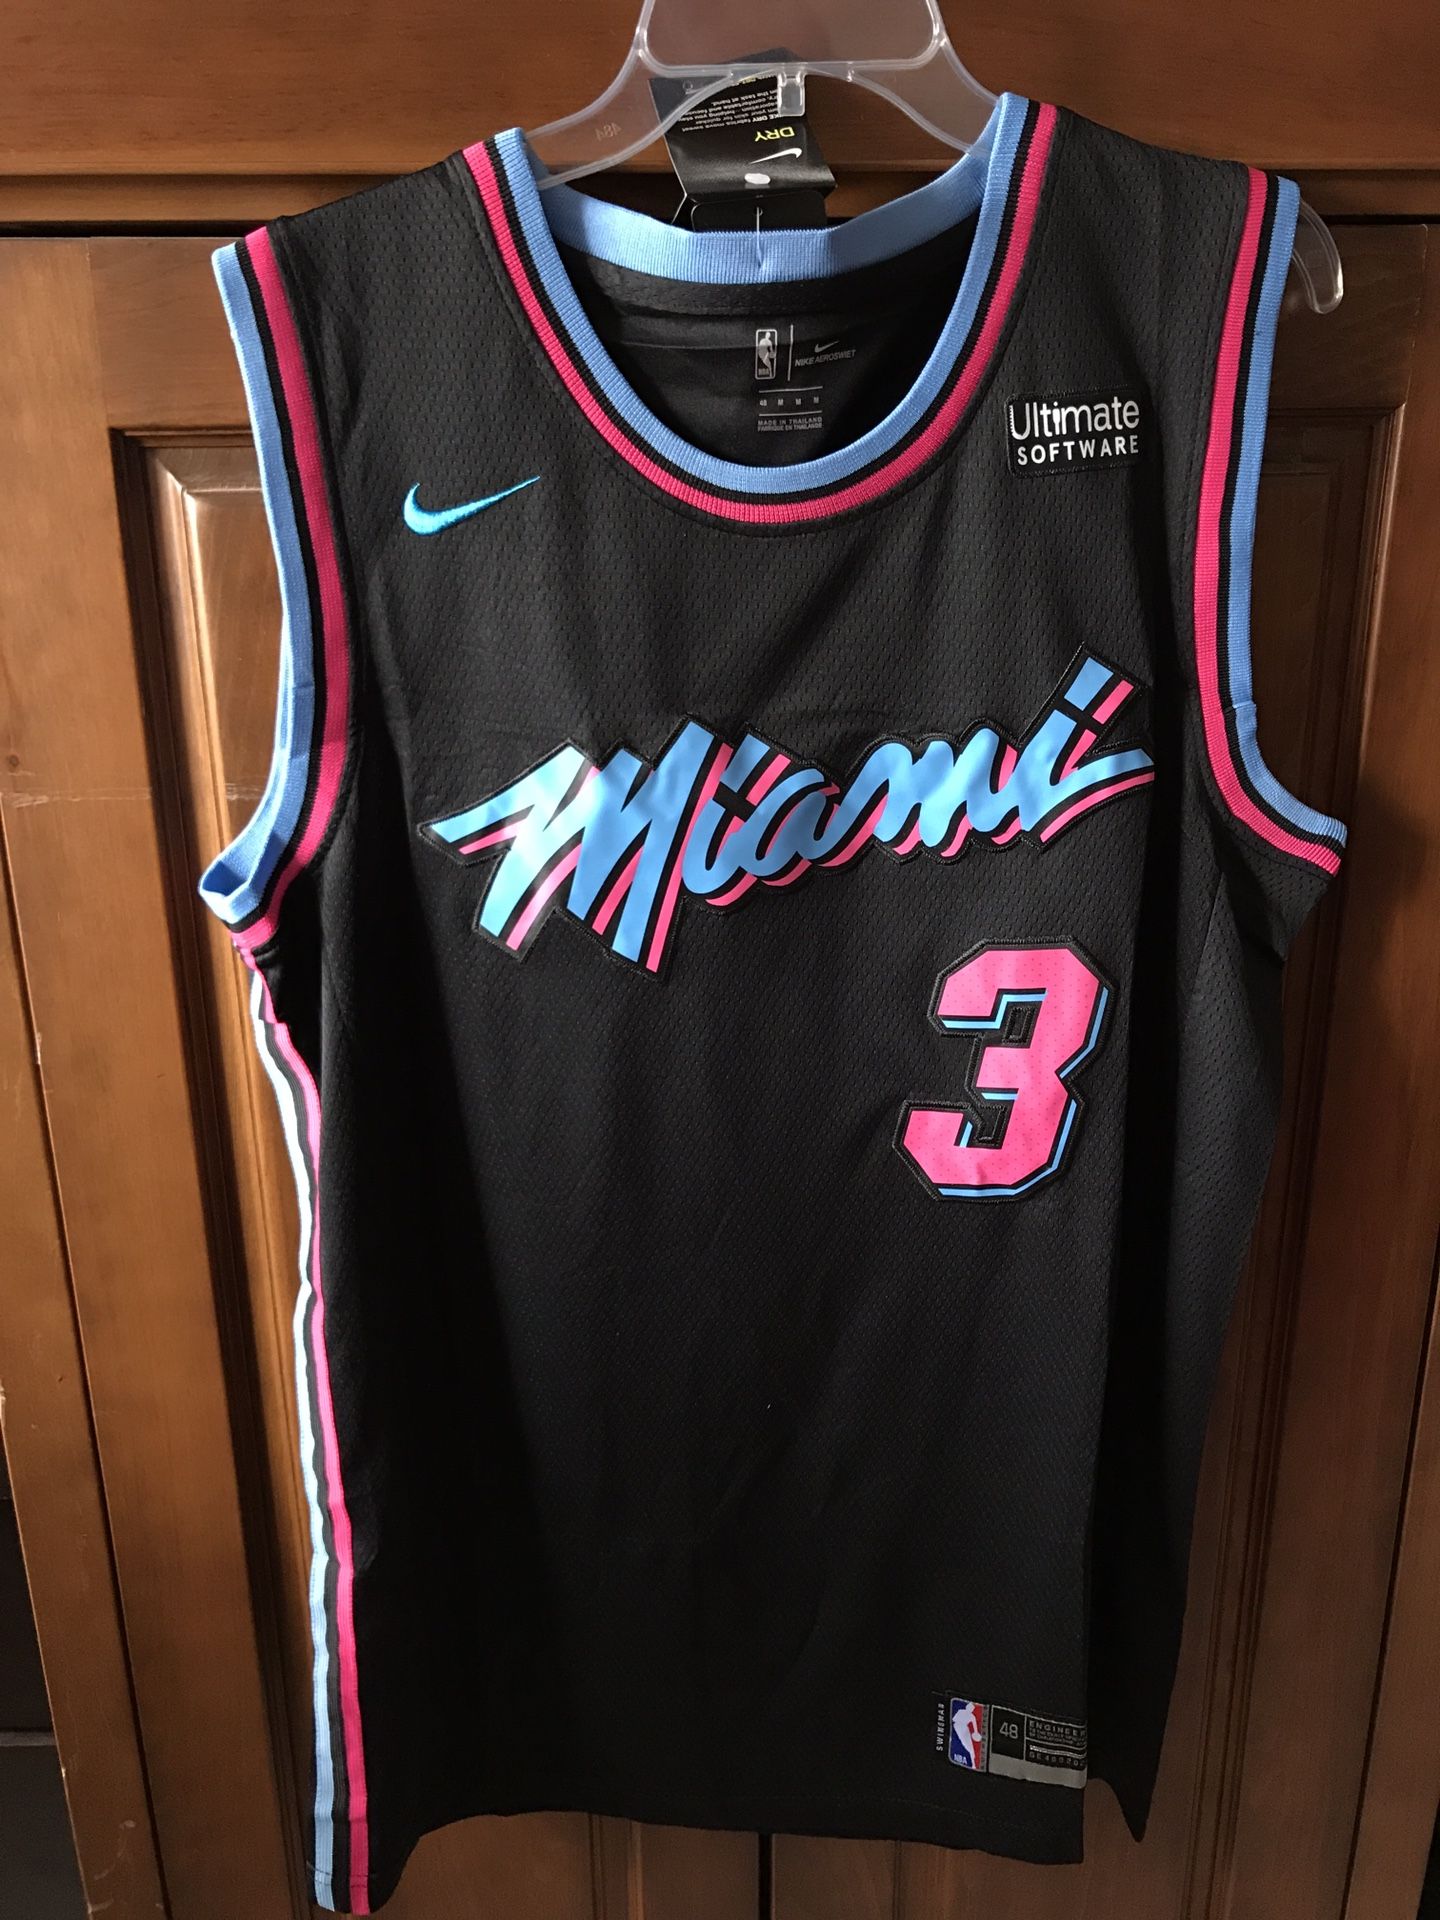 Wade jersey black pink Miami Heat Nike jersey XL for Sale in Mesa, AZ -  OfferUp